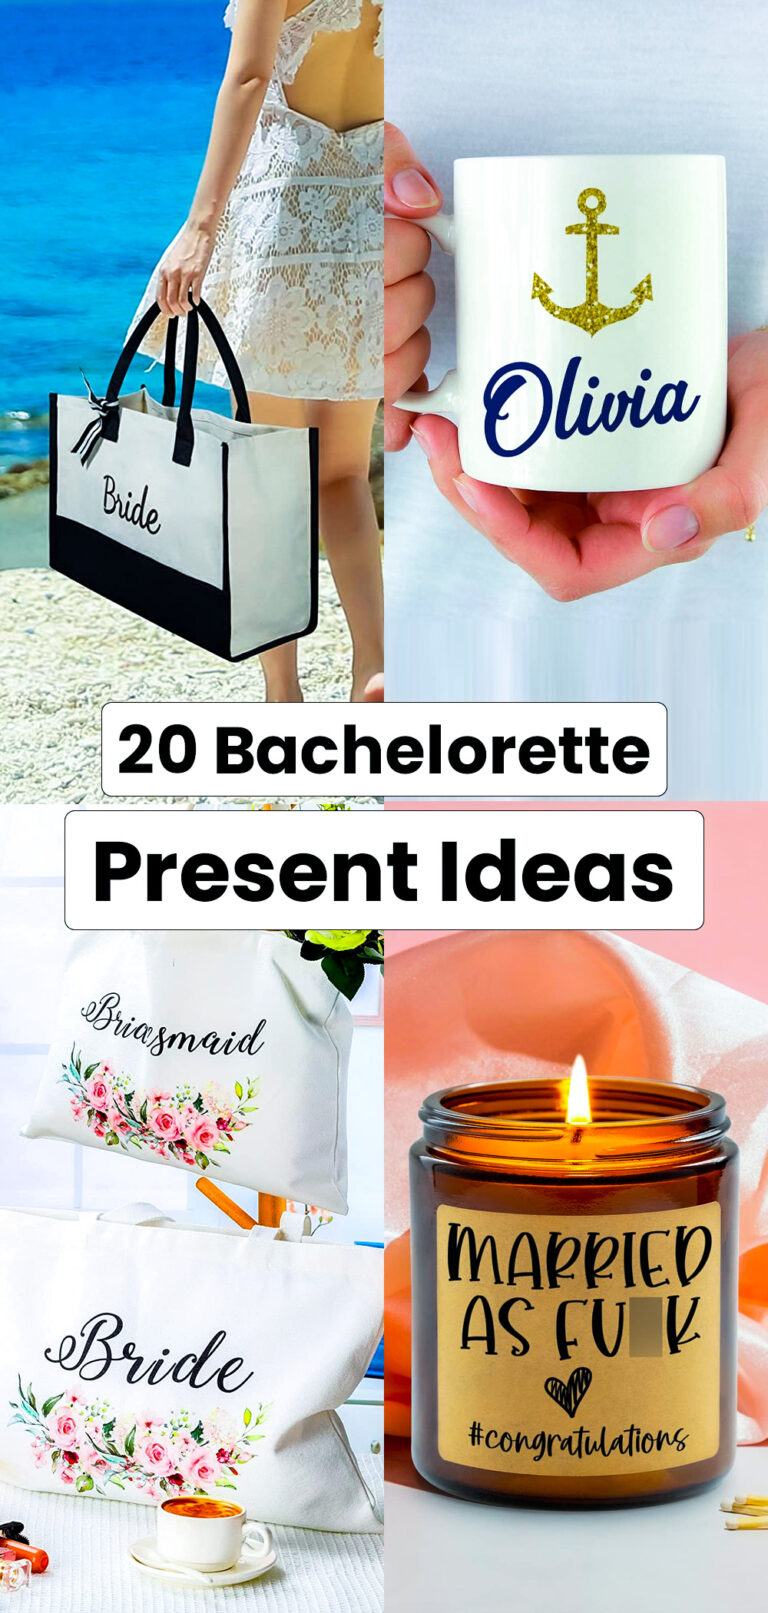 20 Bachelorette Present Ideas